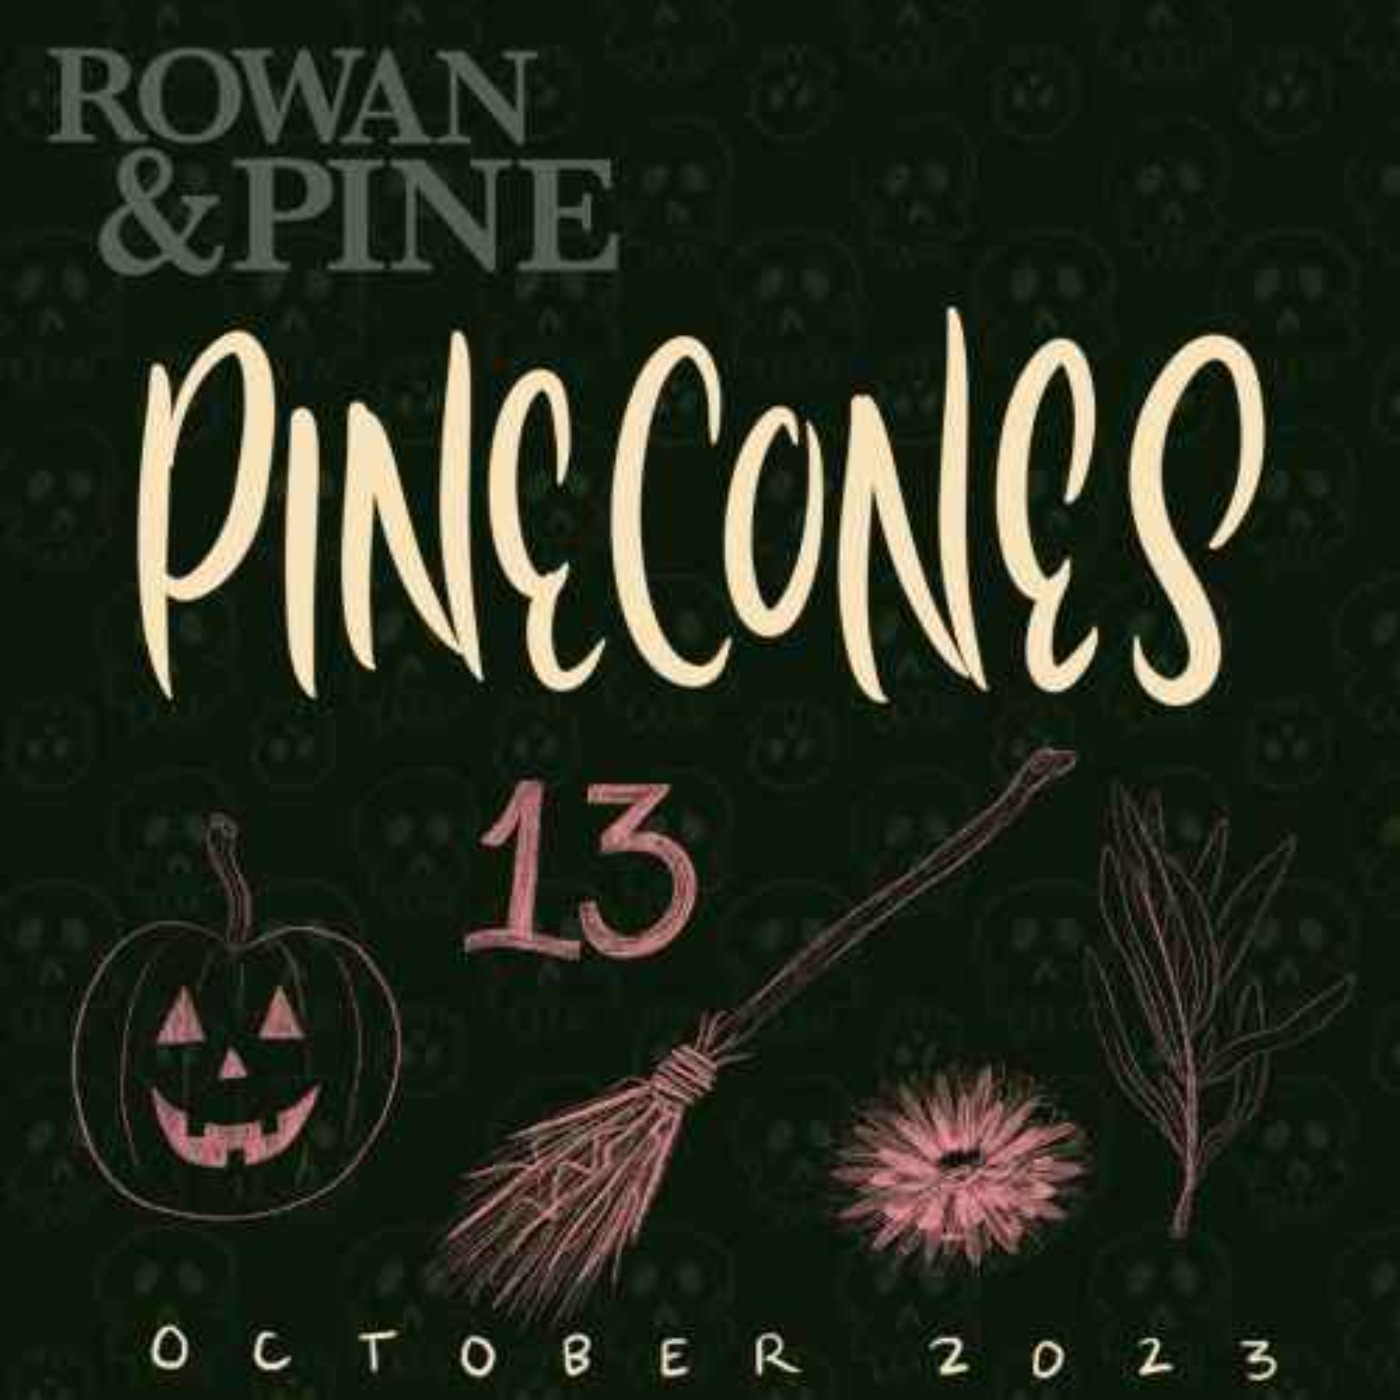 Pine Cones: Friday the 13th| Rowan & Pine Shorts